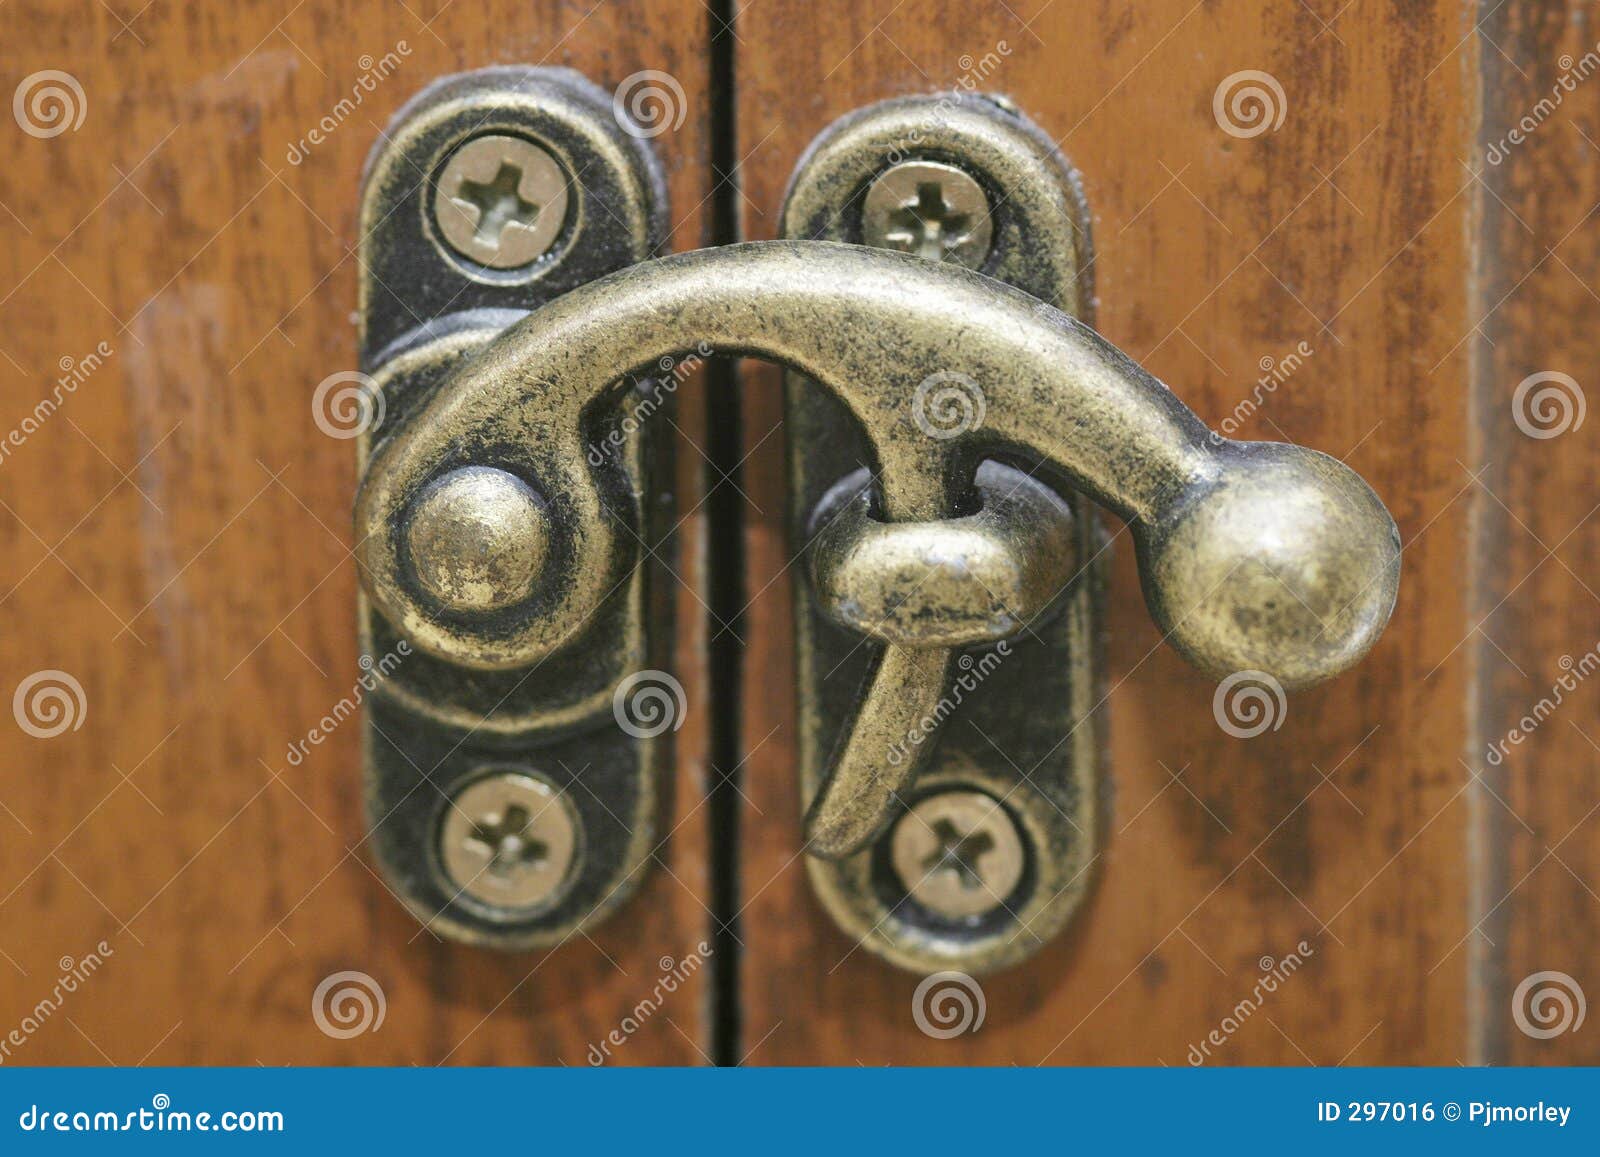 lock mechanism